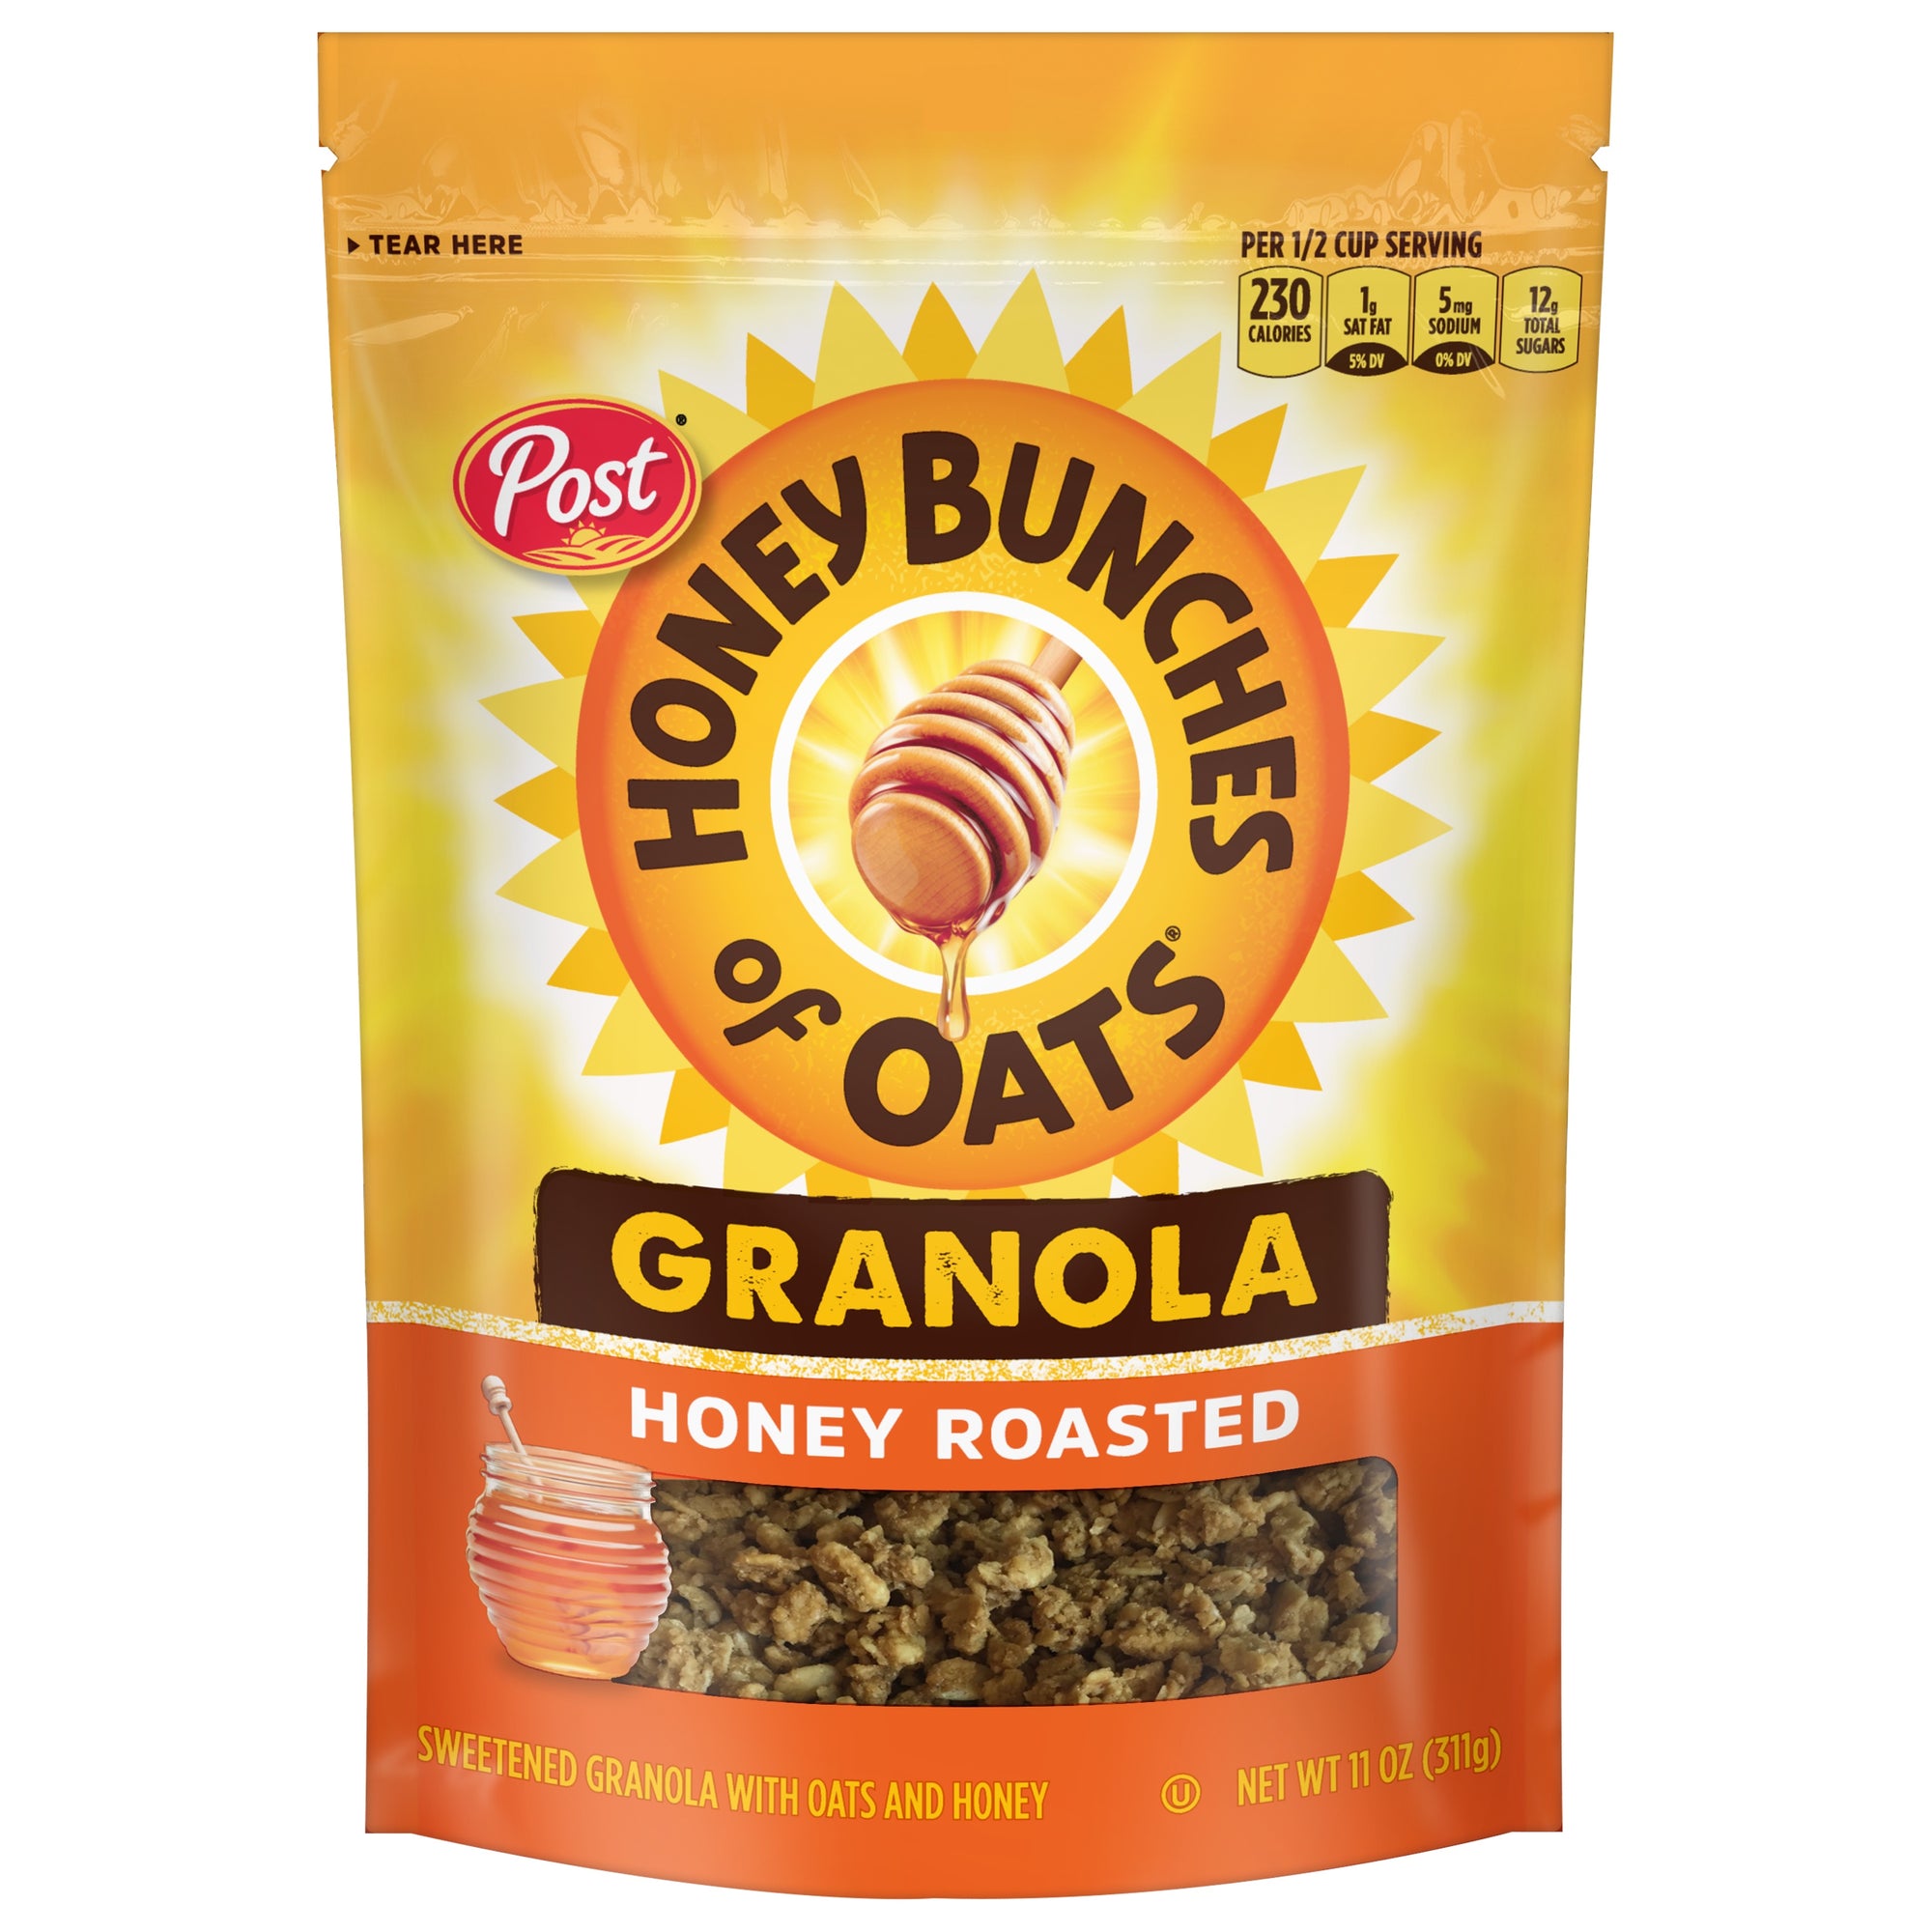 Post Honey Bunches of Oats Honey Roasted Granola 11oz